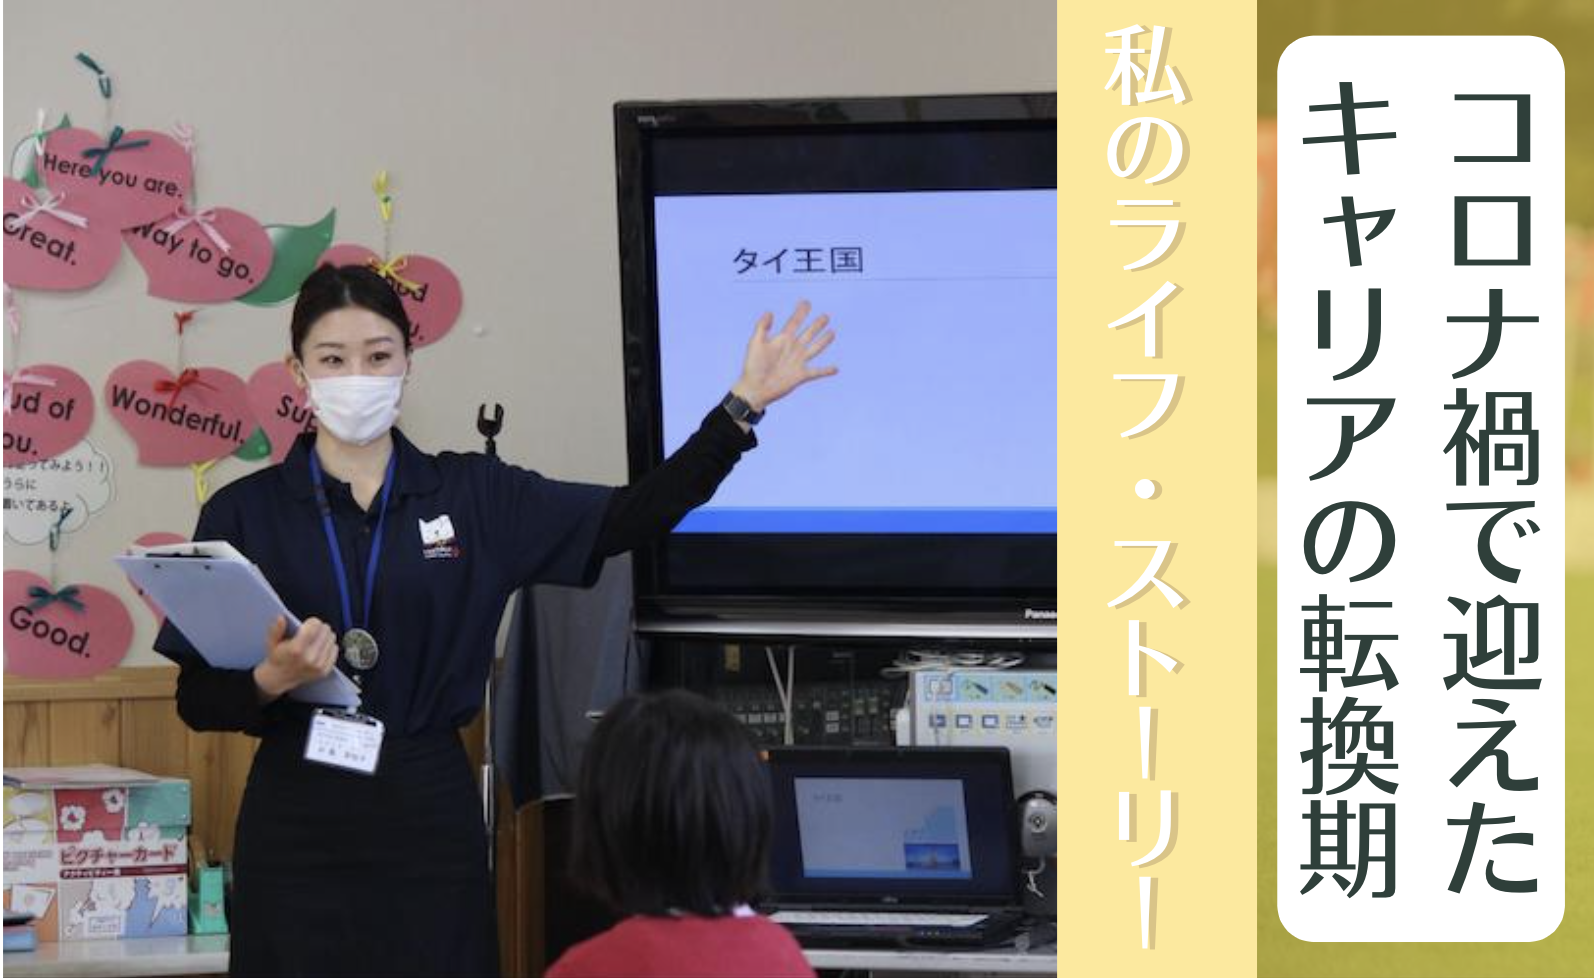 ANA客室乗務員から秋田県大館市の地域おこし協力隊へ <br> 変化をしなやかに受け止め前進する力